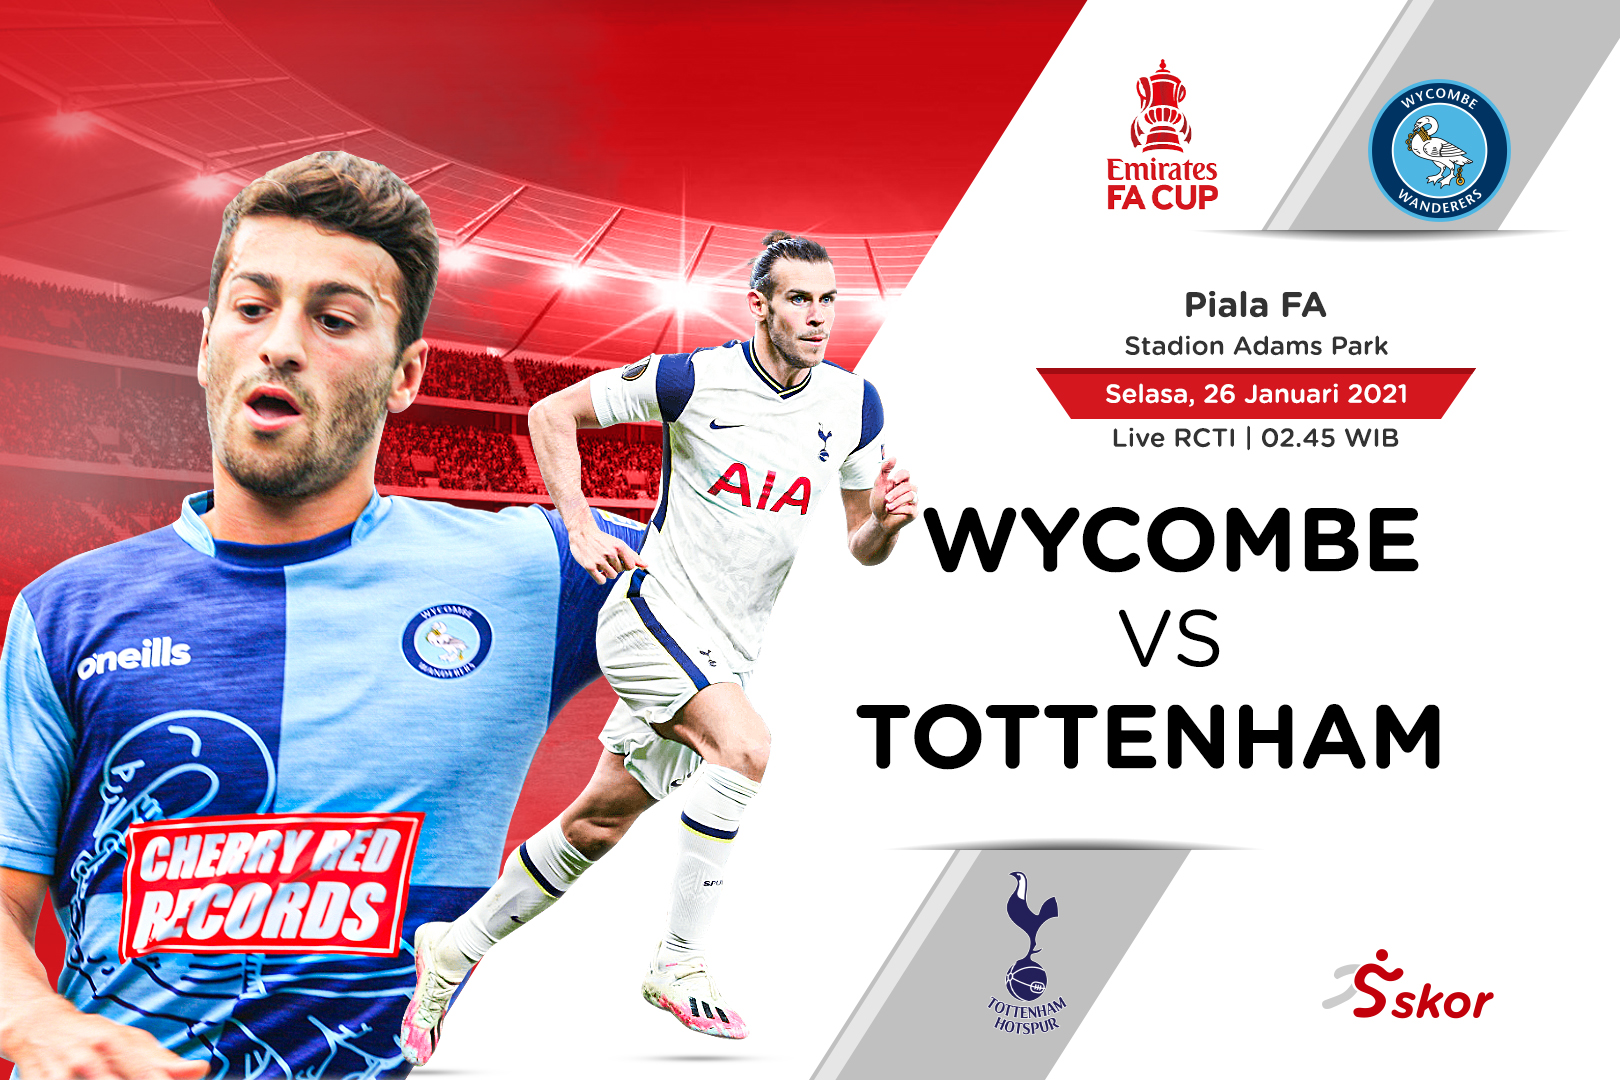 Prediksi Piala FA Wycombe vs Tottenham Hotspur: Momen Carlos Vinicius dan Gareth Bale